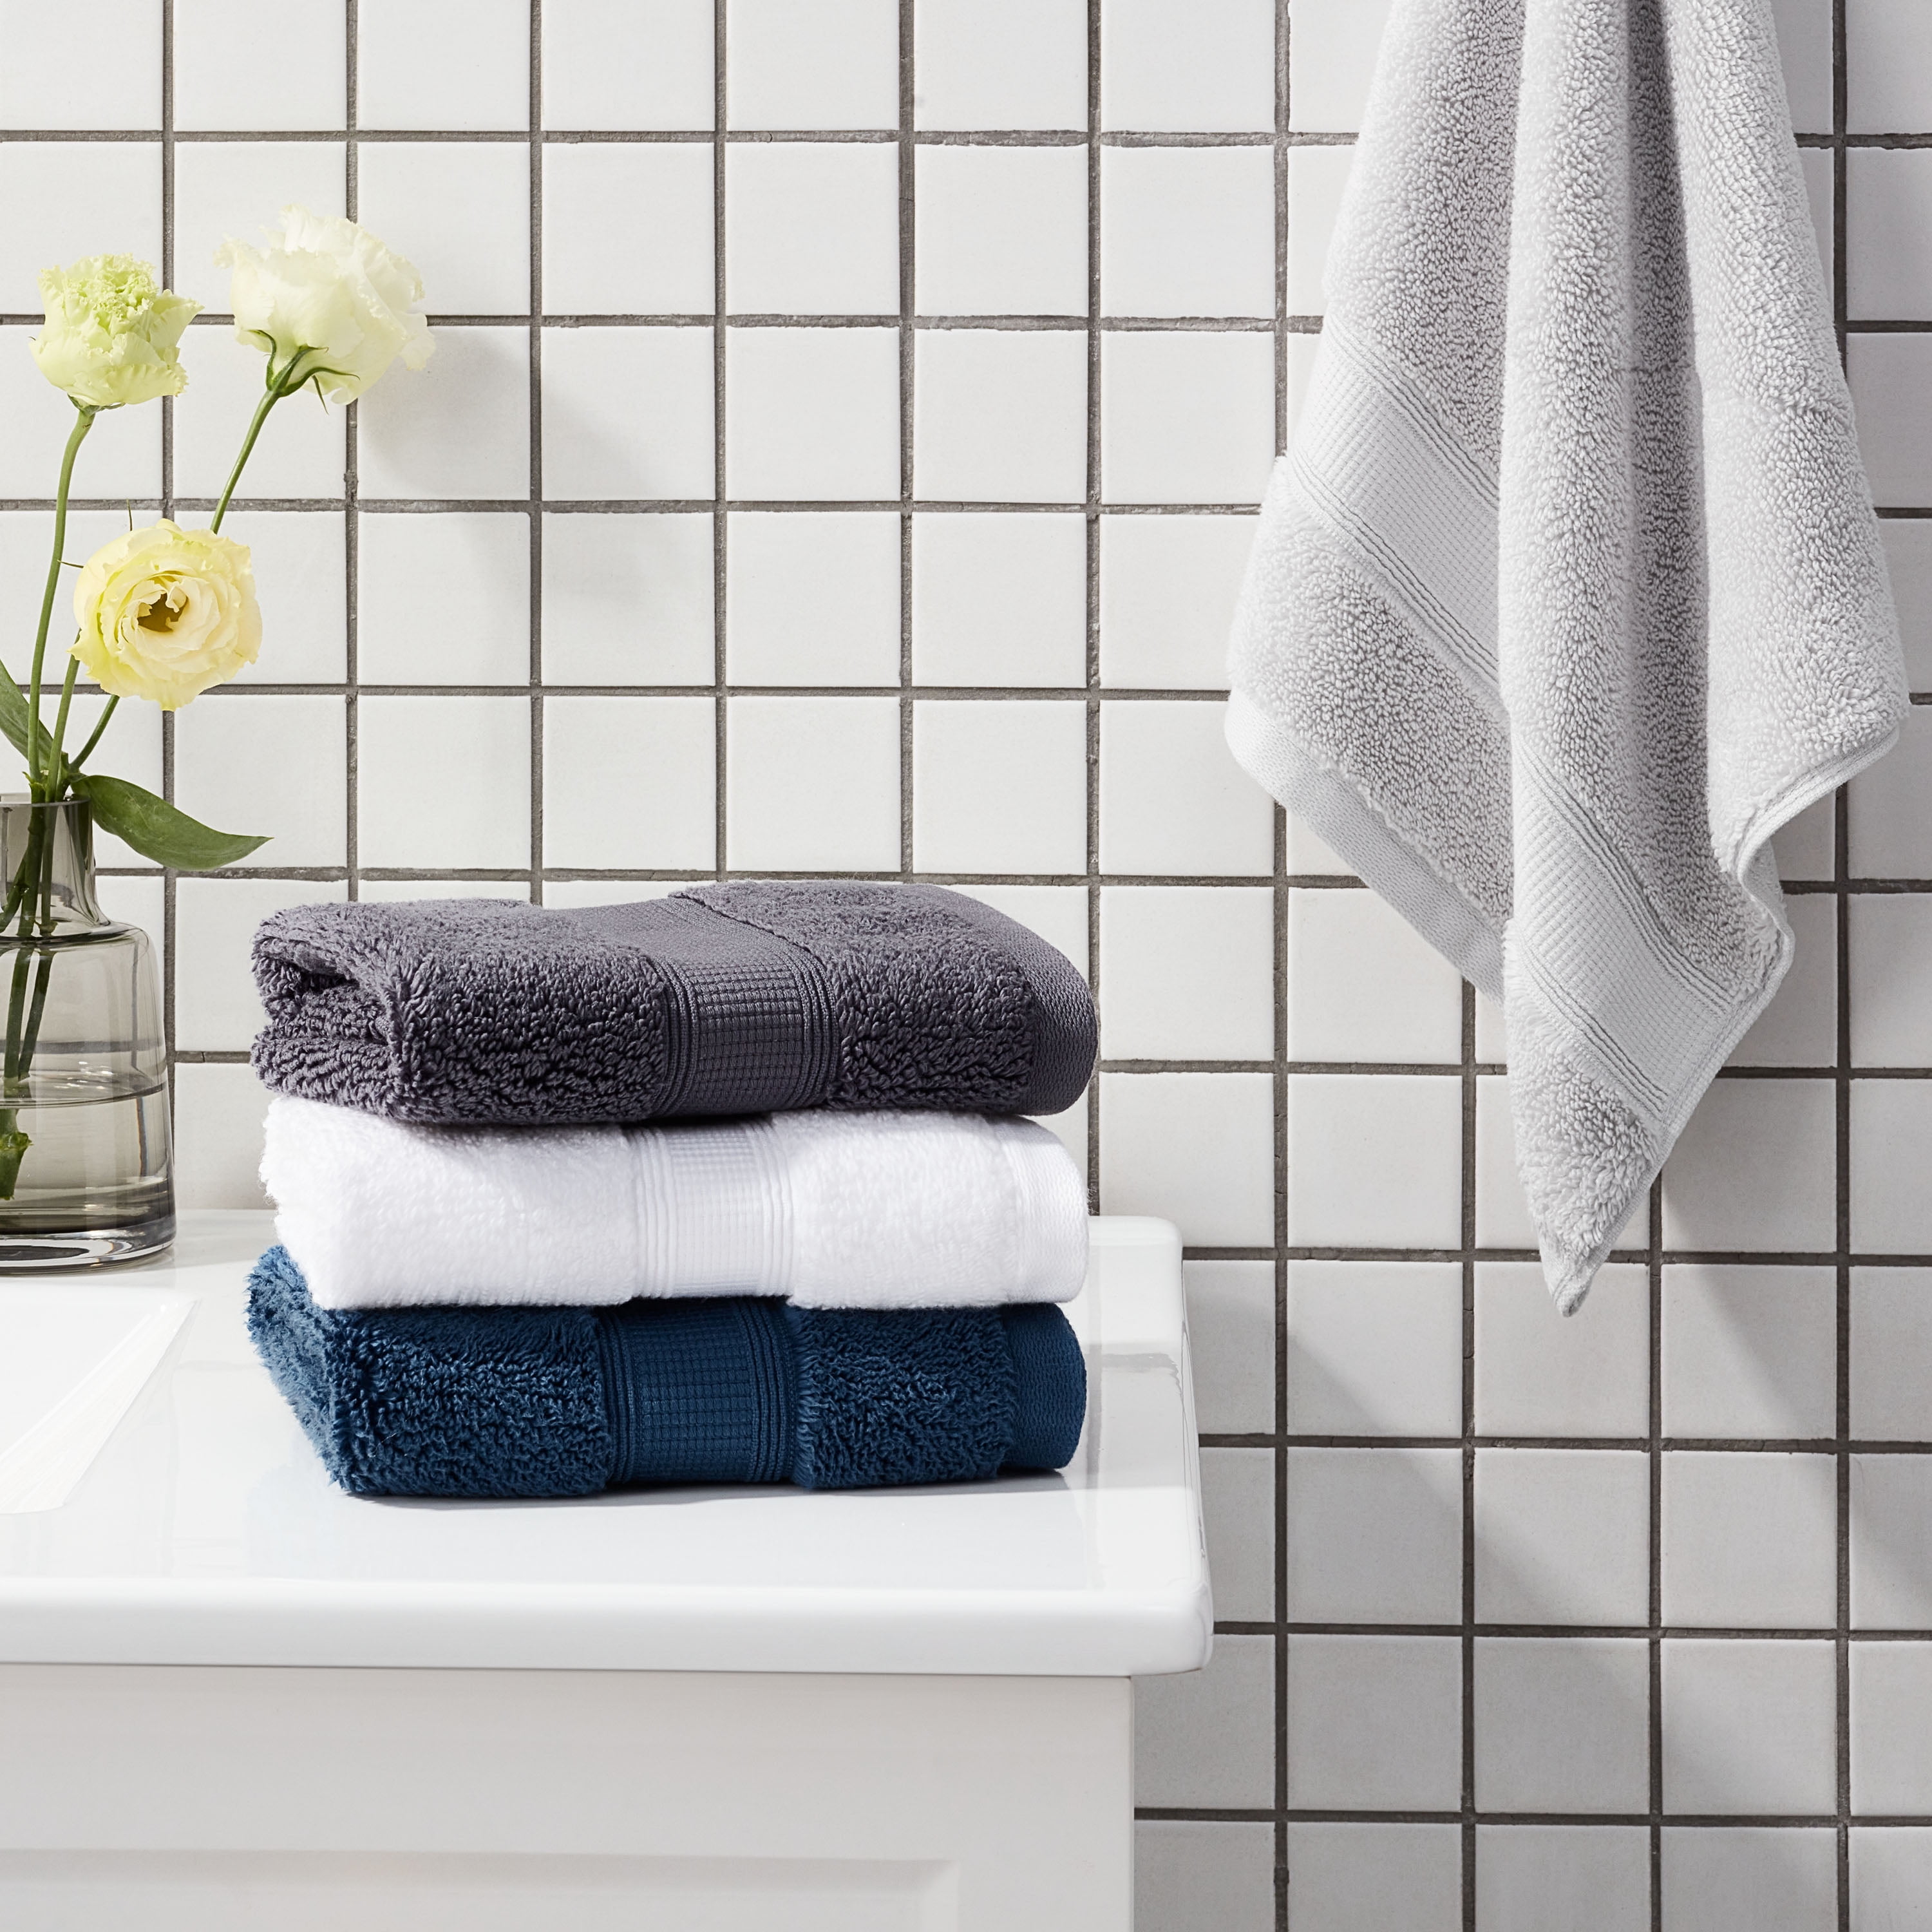 StyleWell HygroCotton White 6-Piece Bath Towel Set AT17641_white